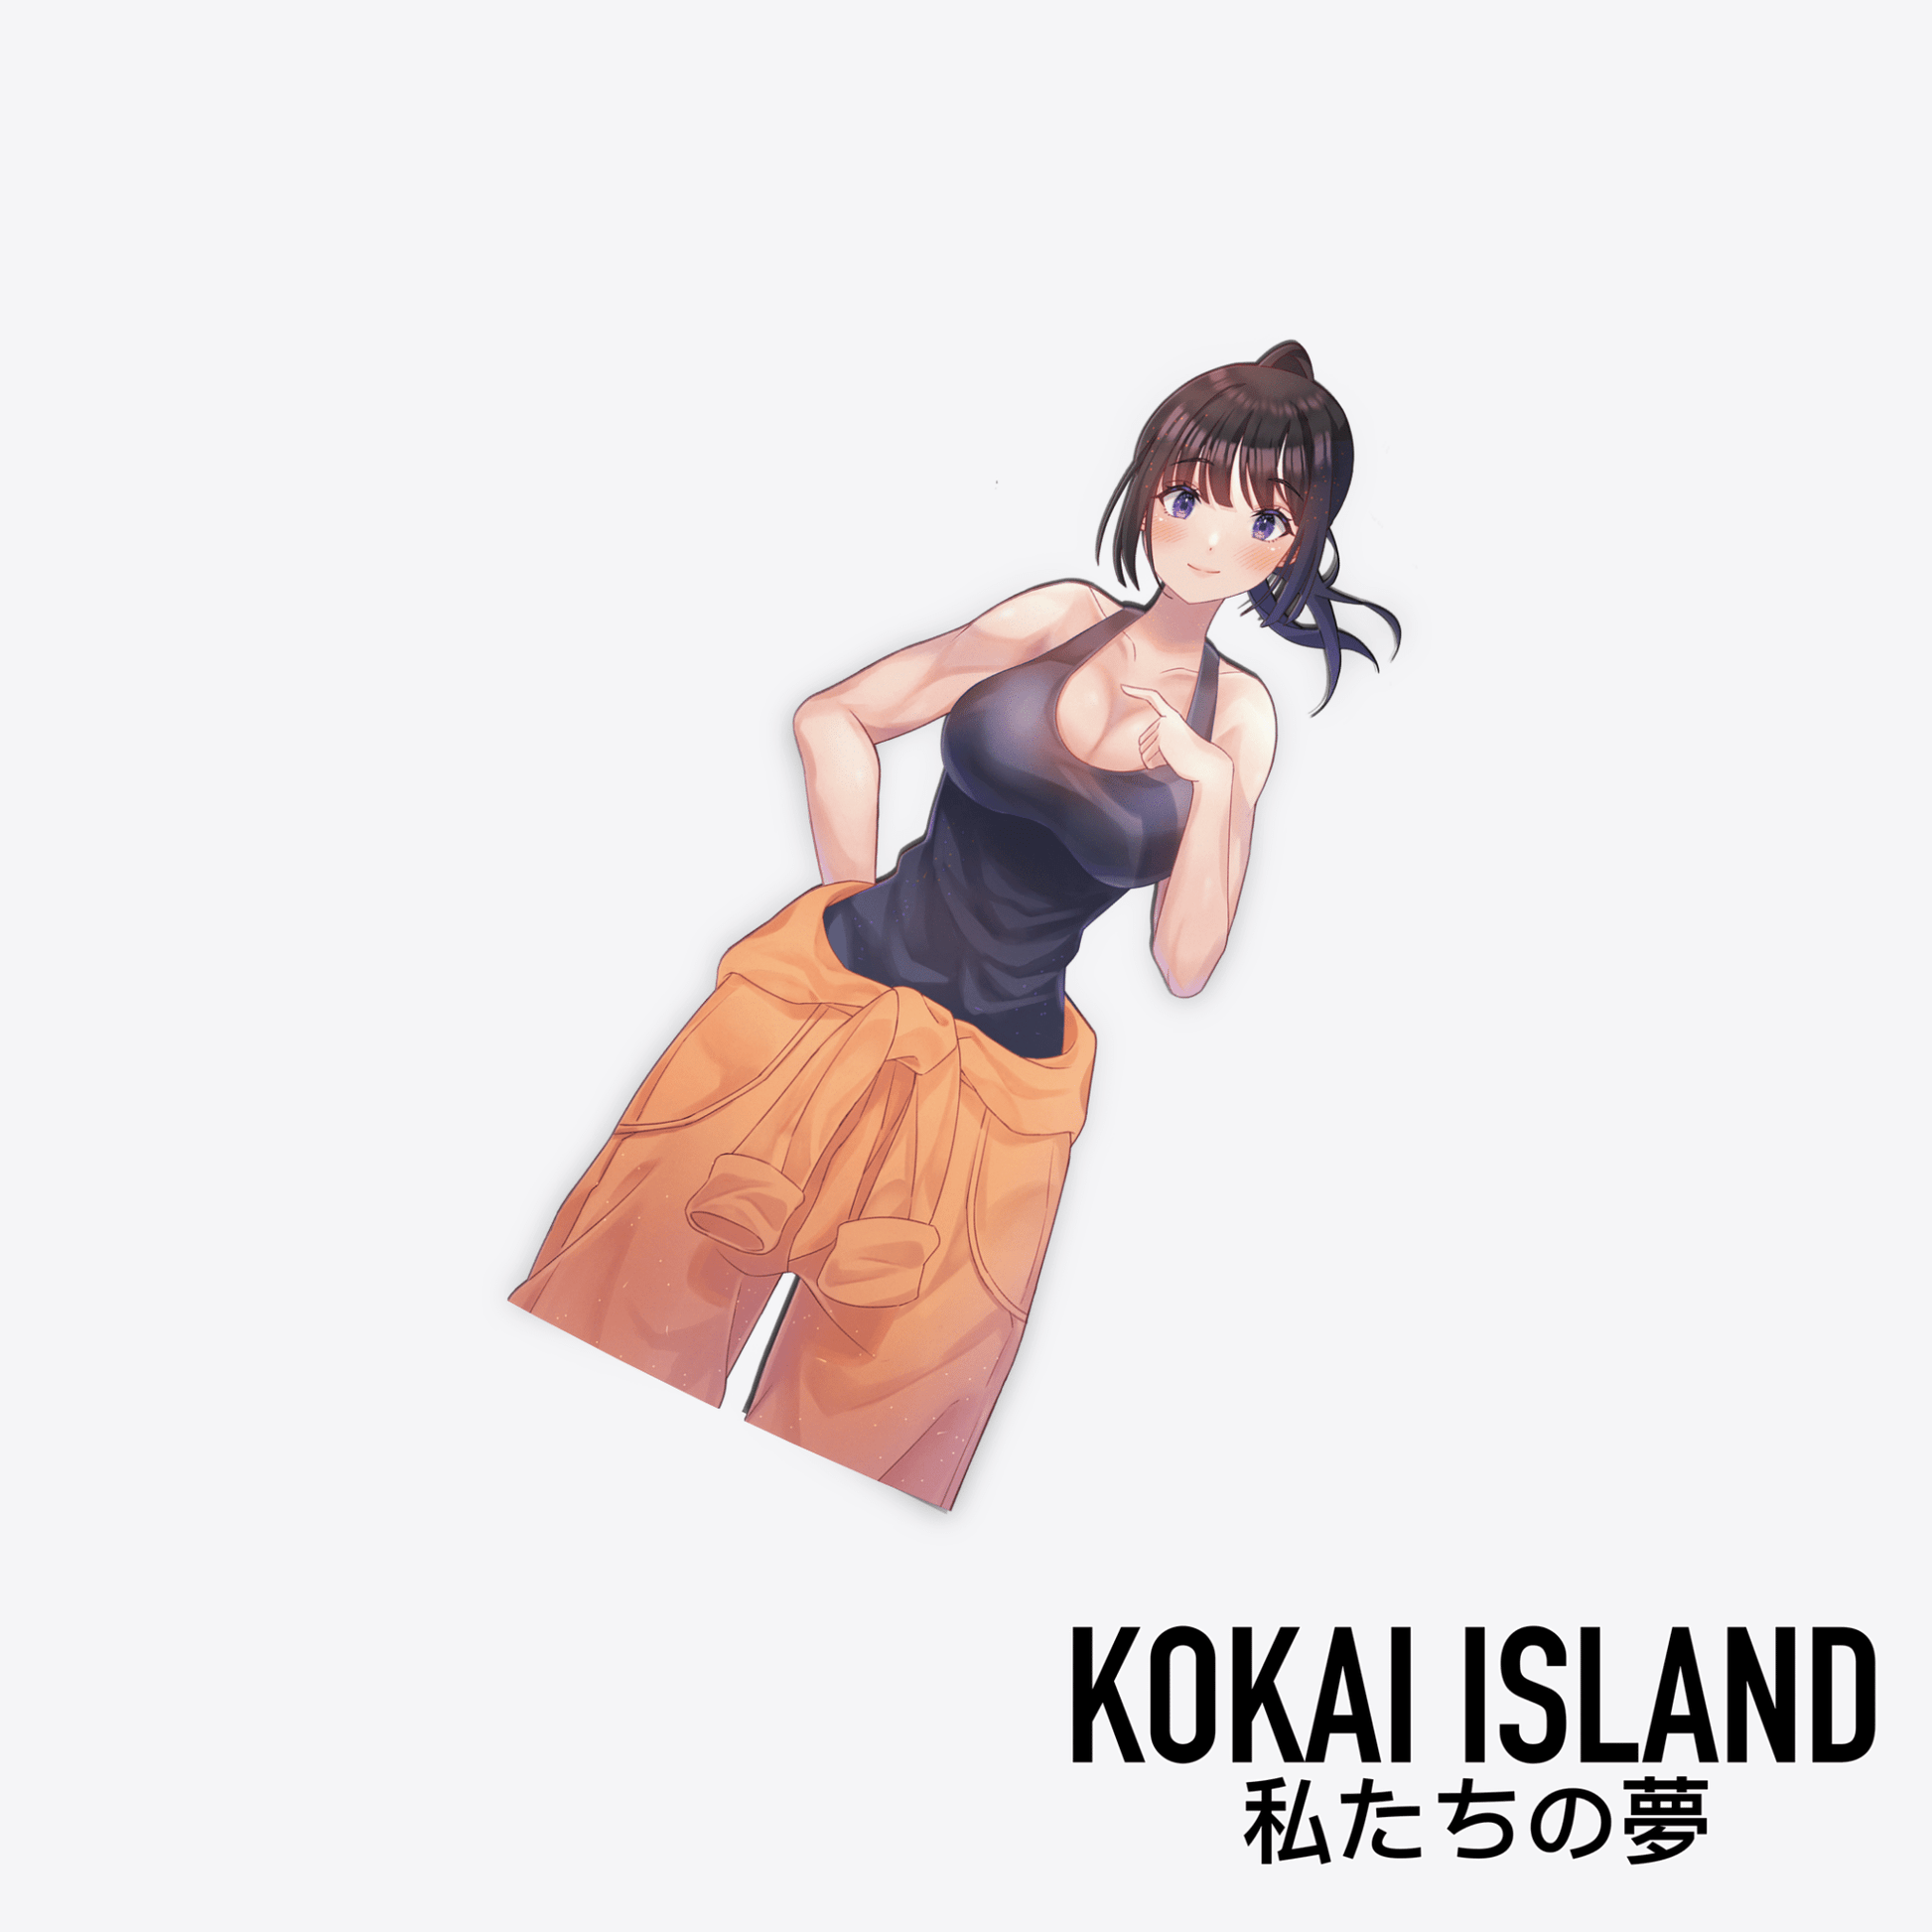 Strong Girl DecalDecalKokai Island